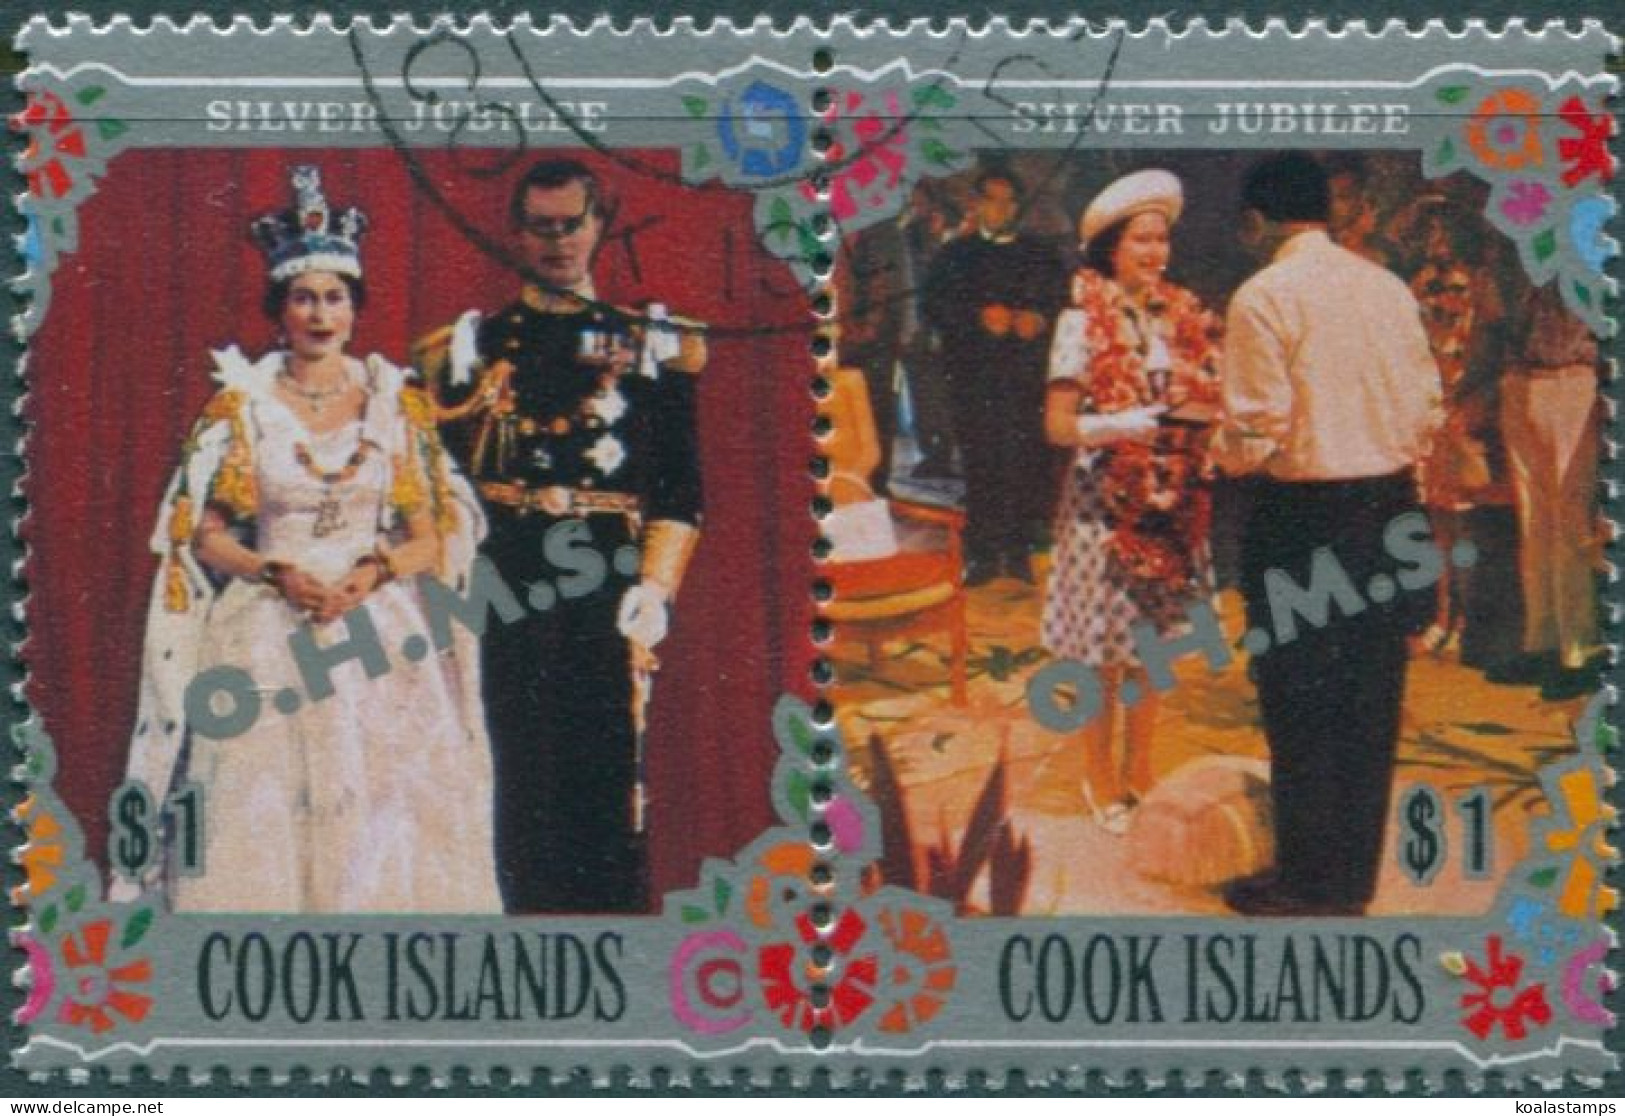 Cook Islands OHMS 1978 SGO27-O28 Royal Visit Pair CTO - Cook